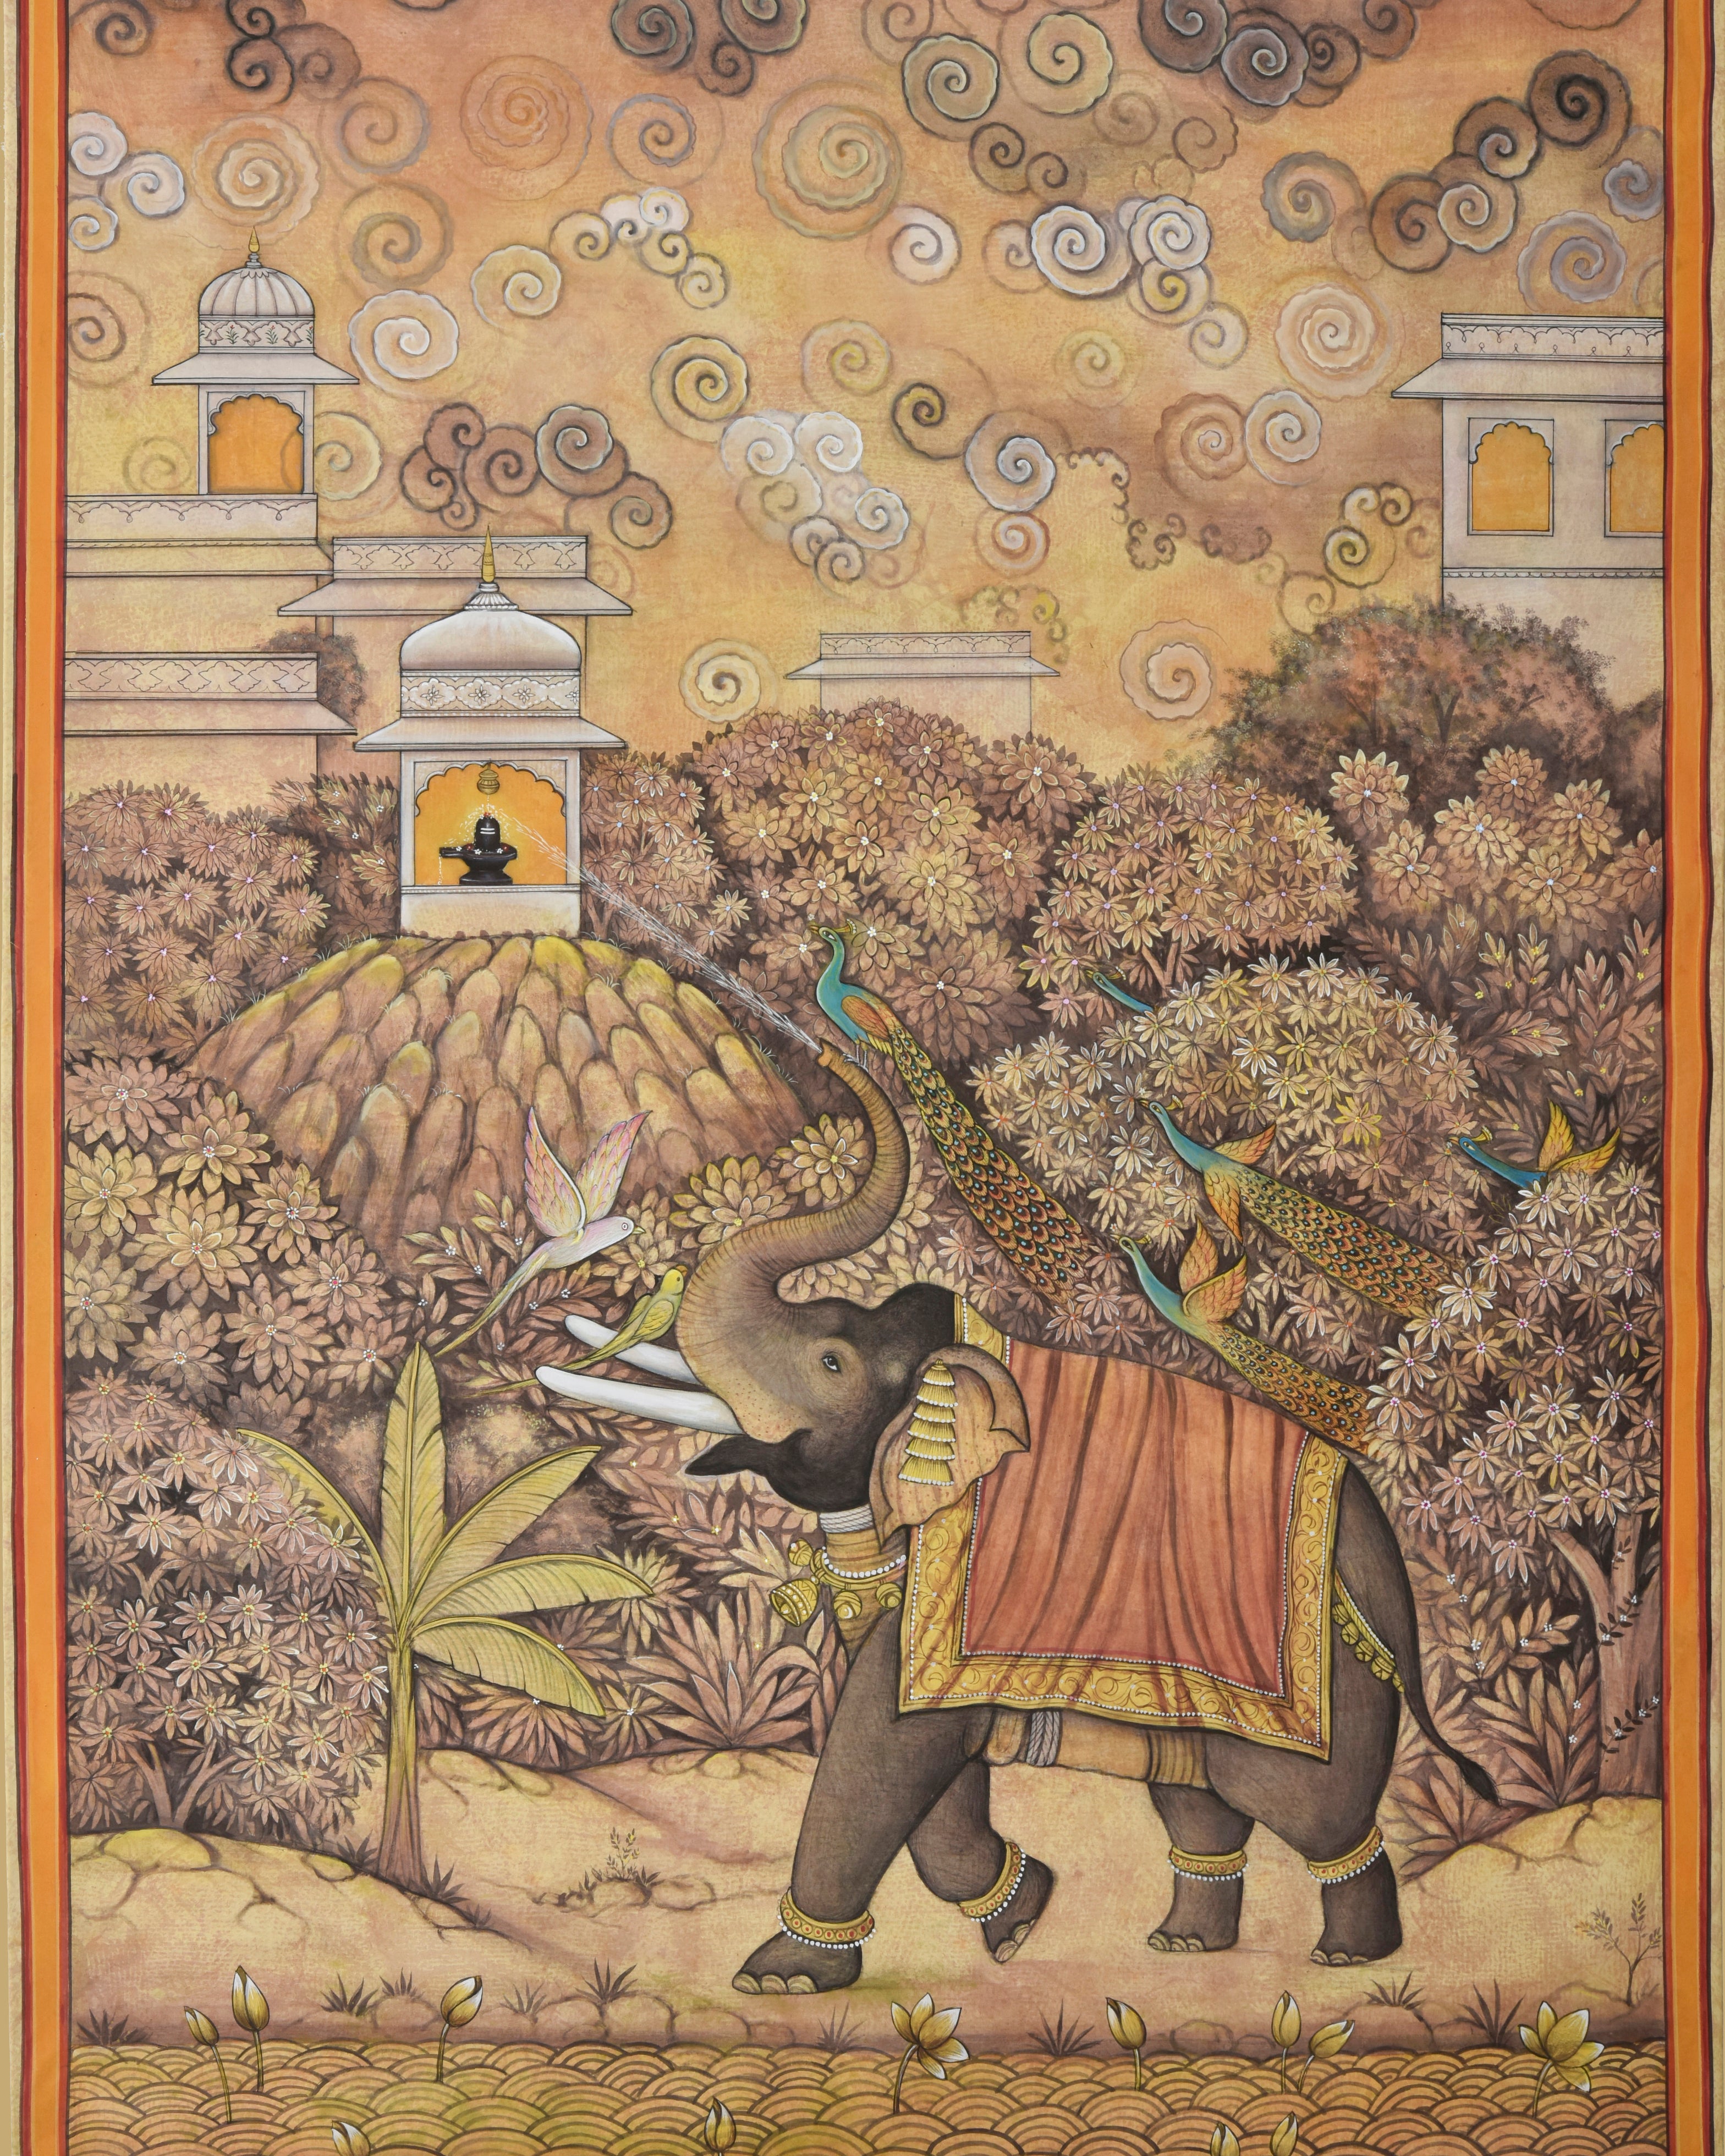 Pichwai Painting | Elephants, Peacocks and Shiva Lingam | Indian Art